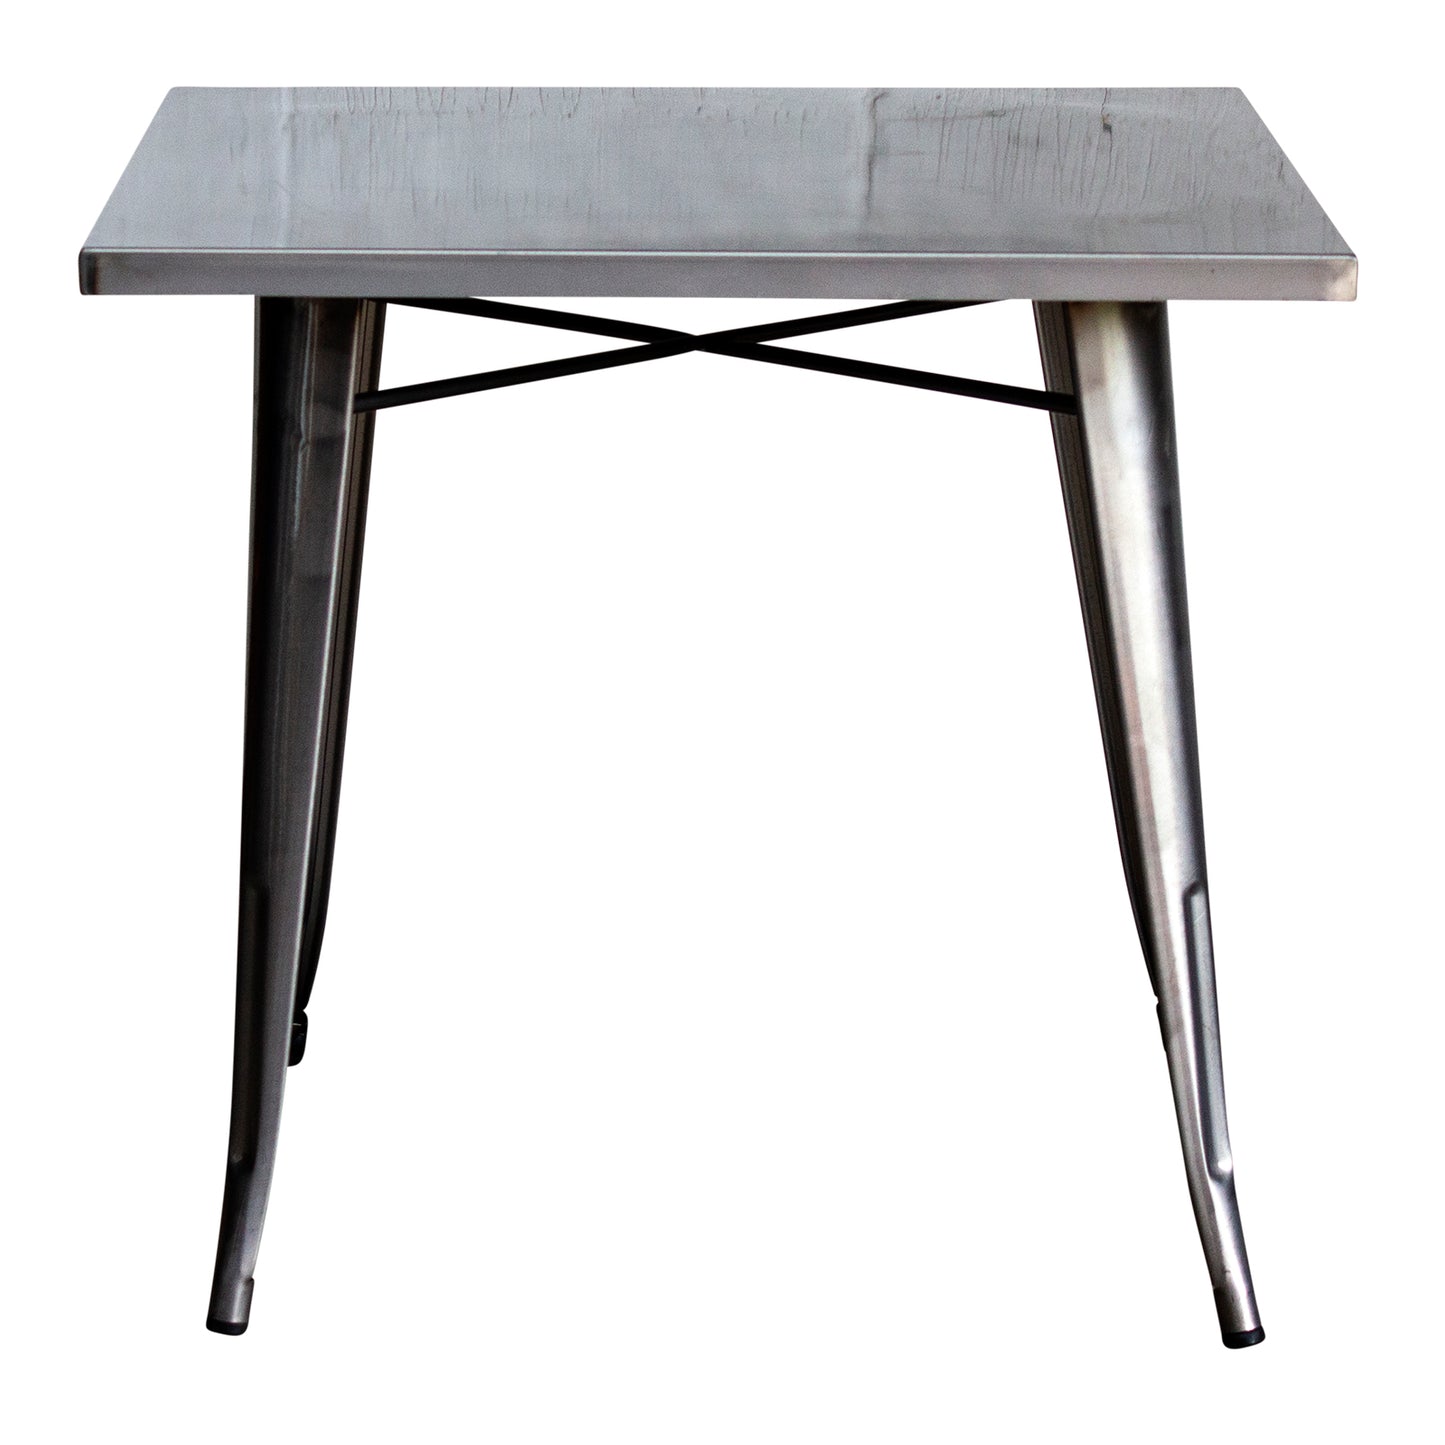 3PC Belvedere Table & Siena Chair Set - Steel